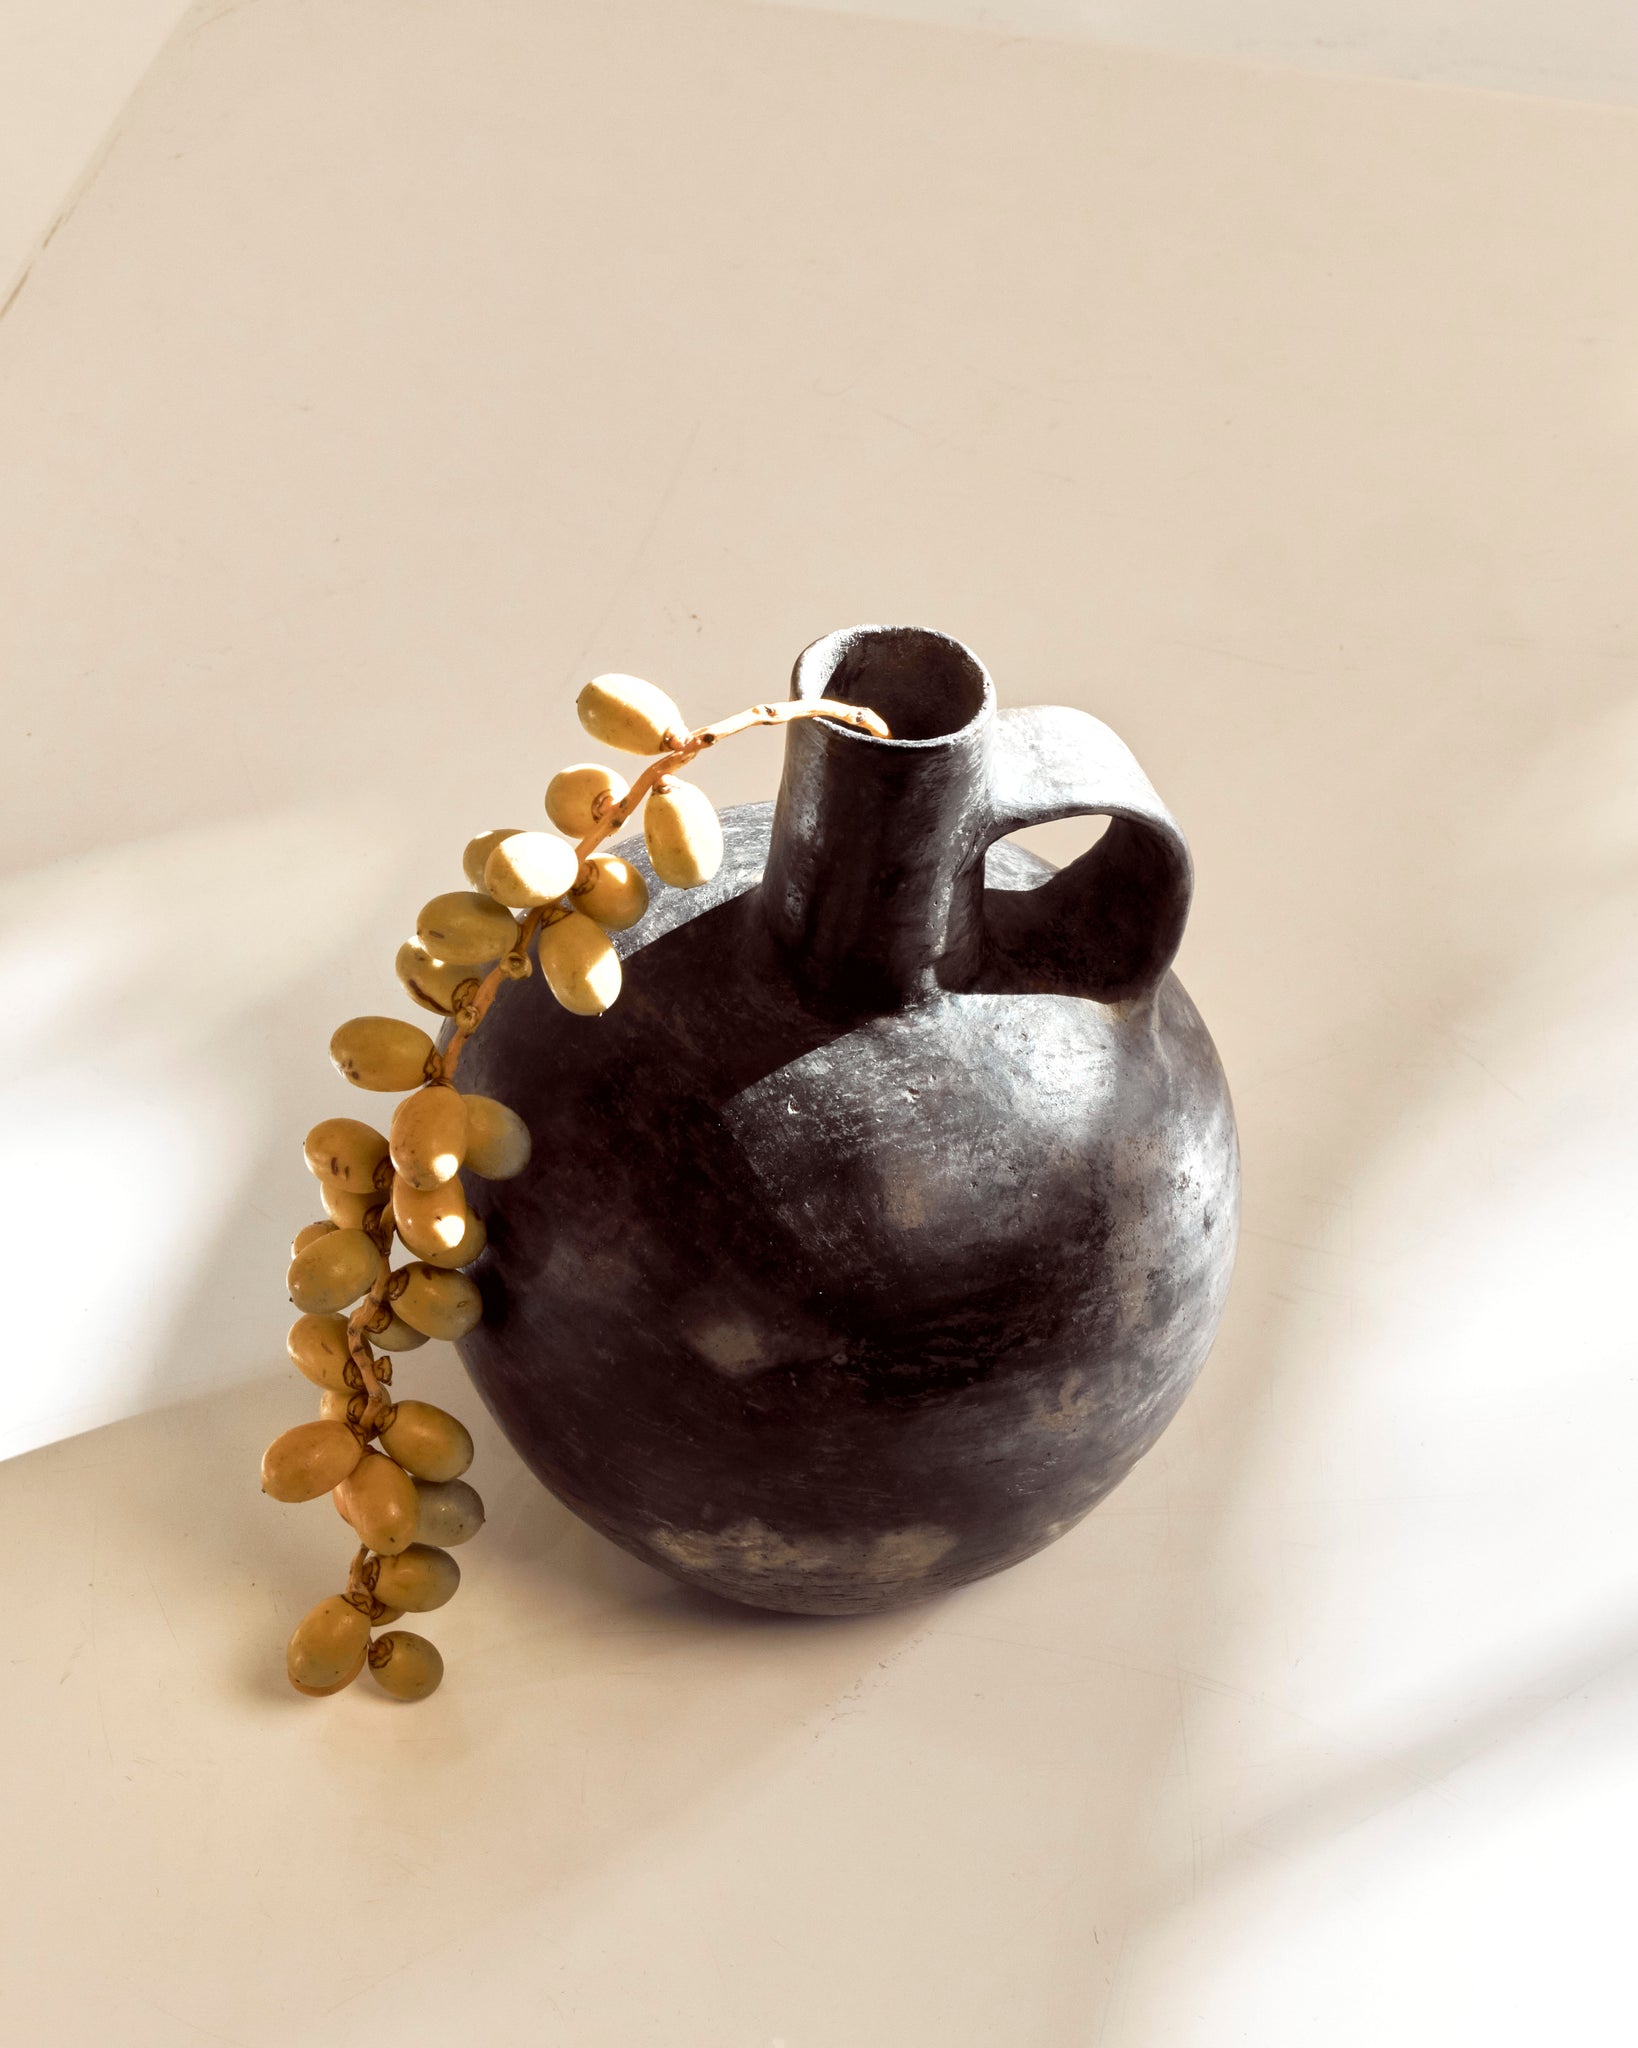 Pre-Columbian Blackware Vessel from the Chimu Culture